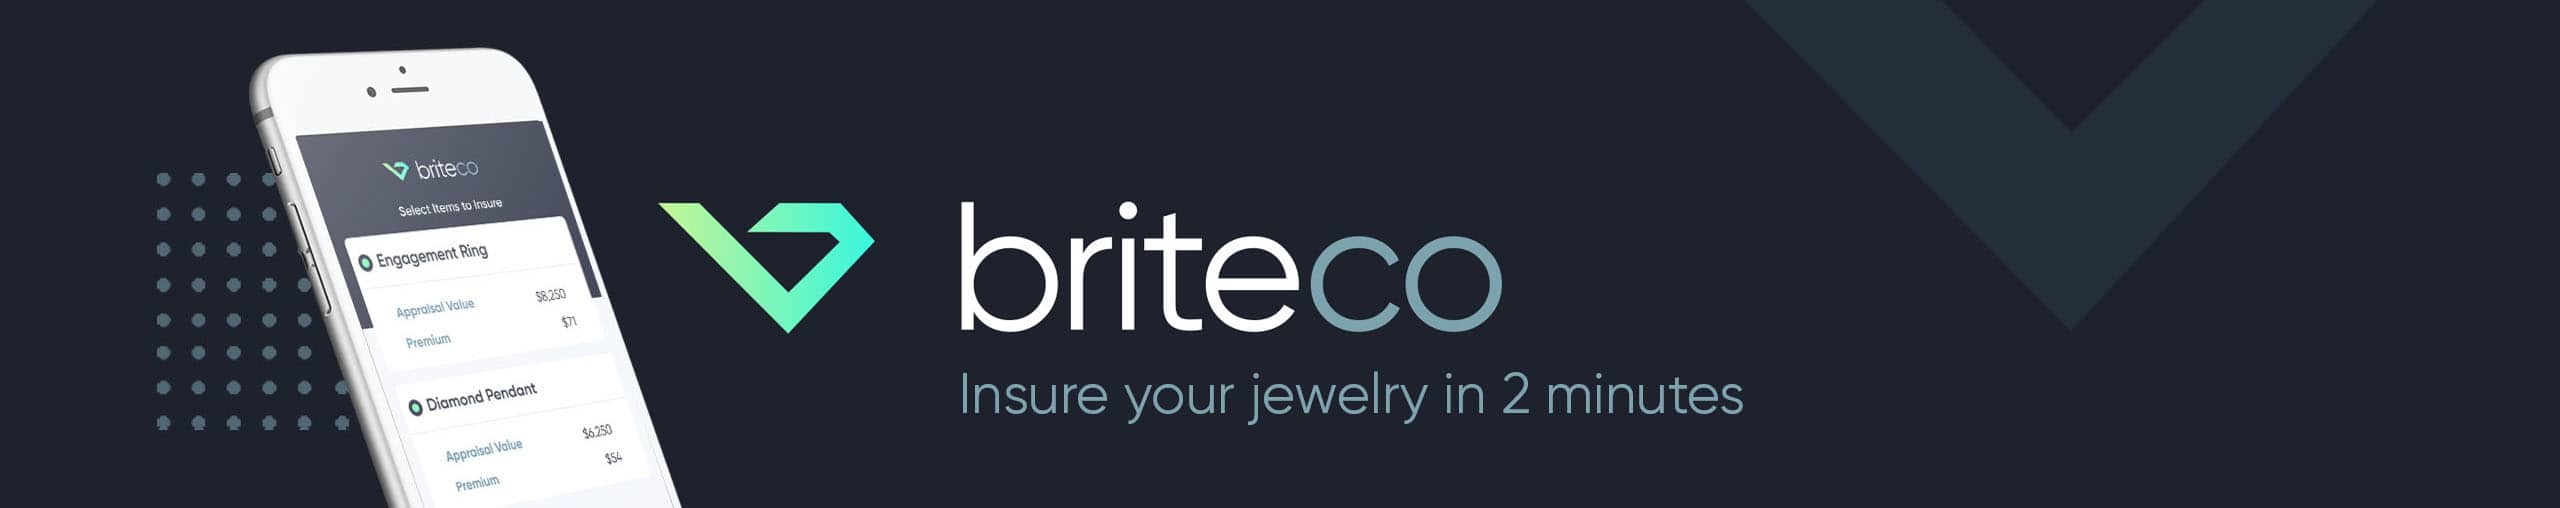 BriteCo-insure jewelry in 2 minutes